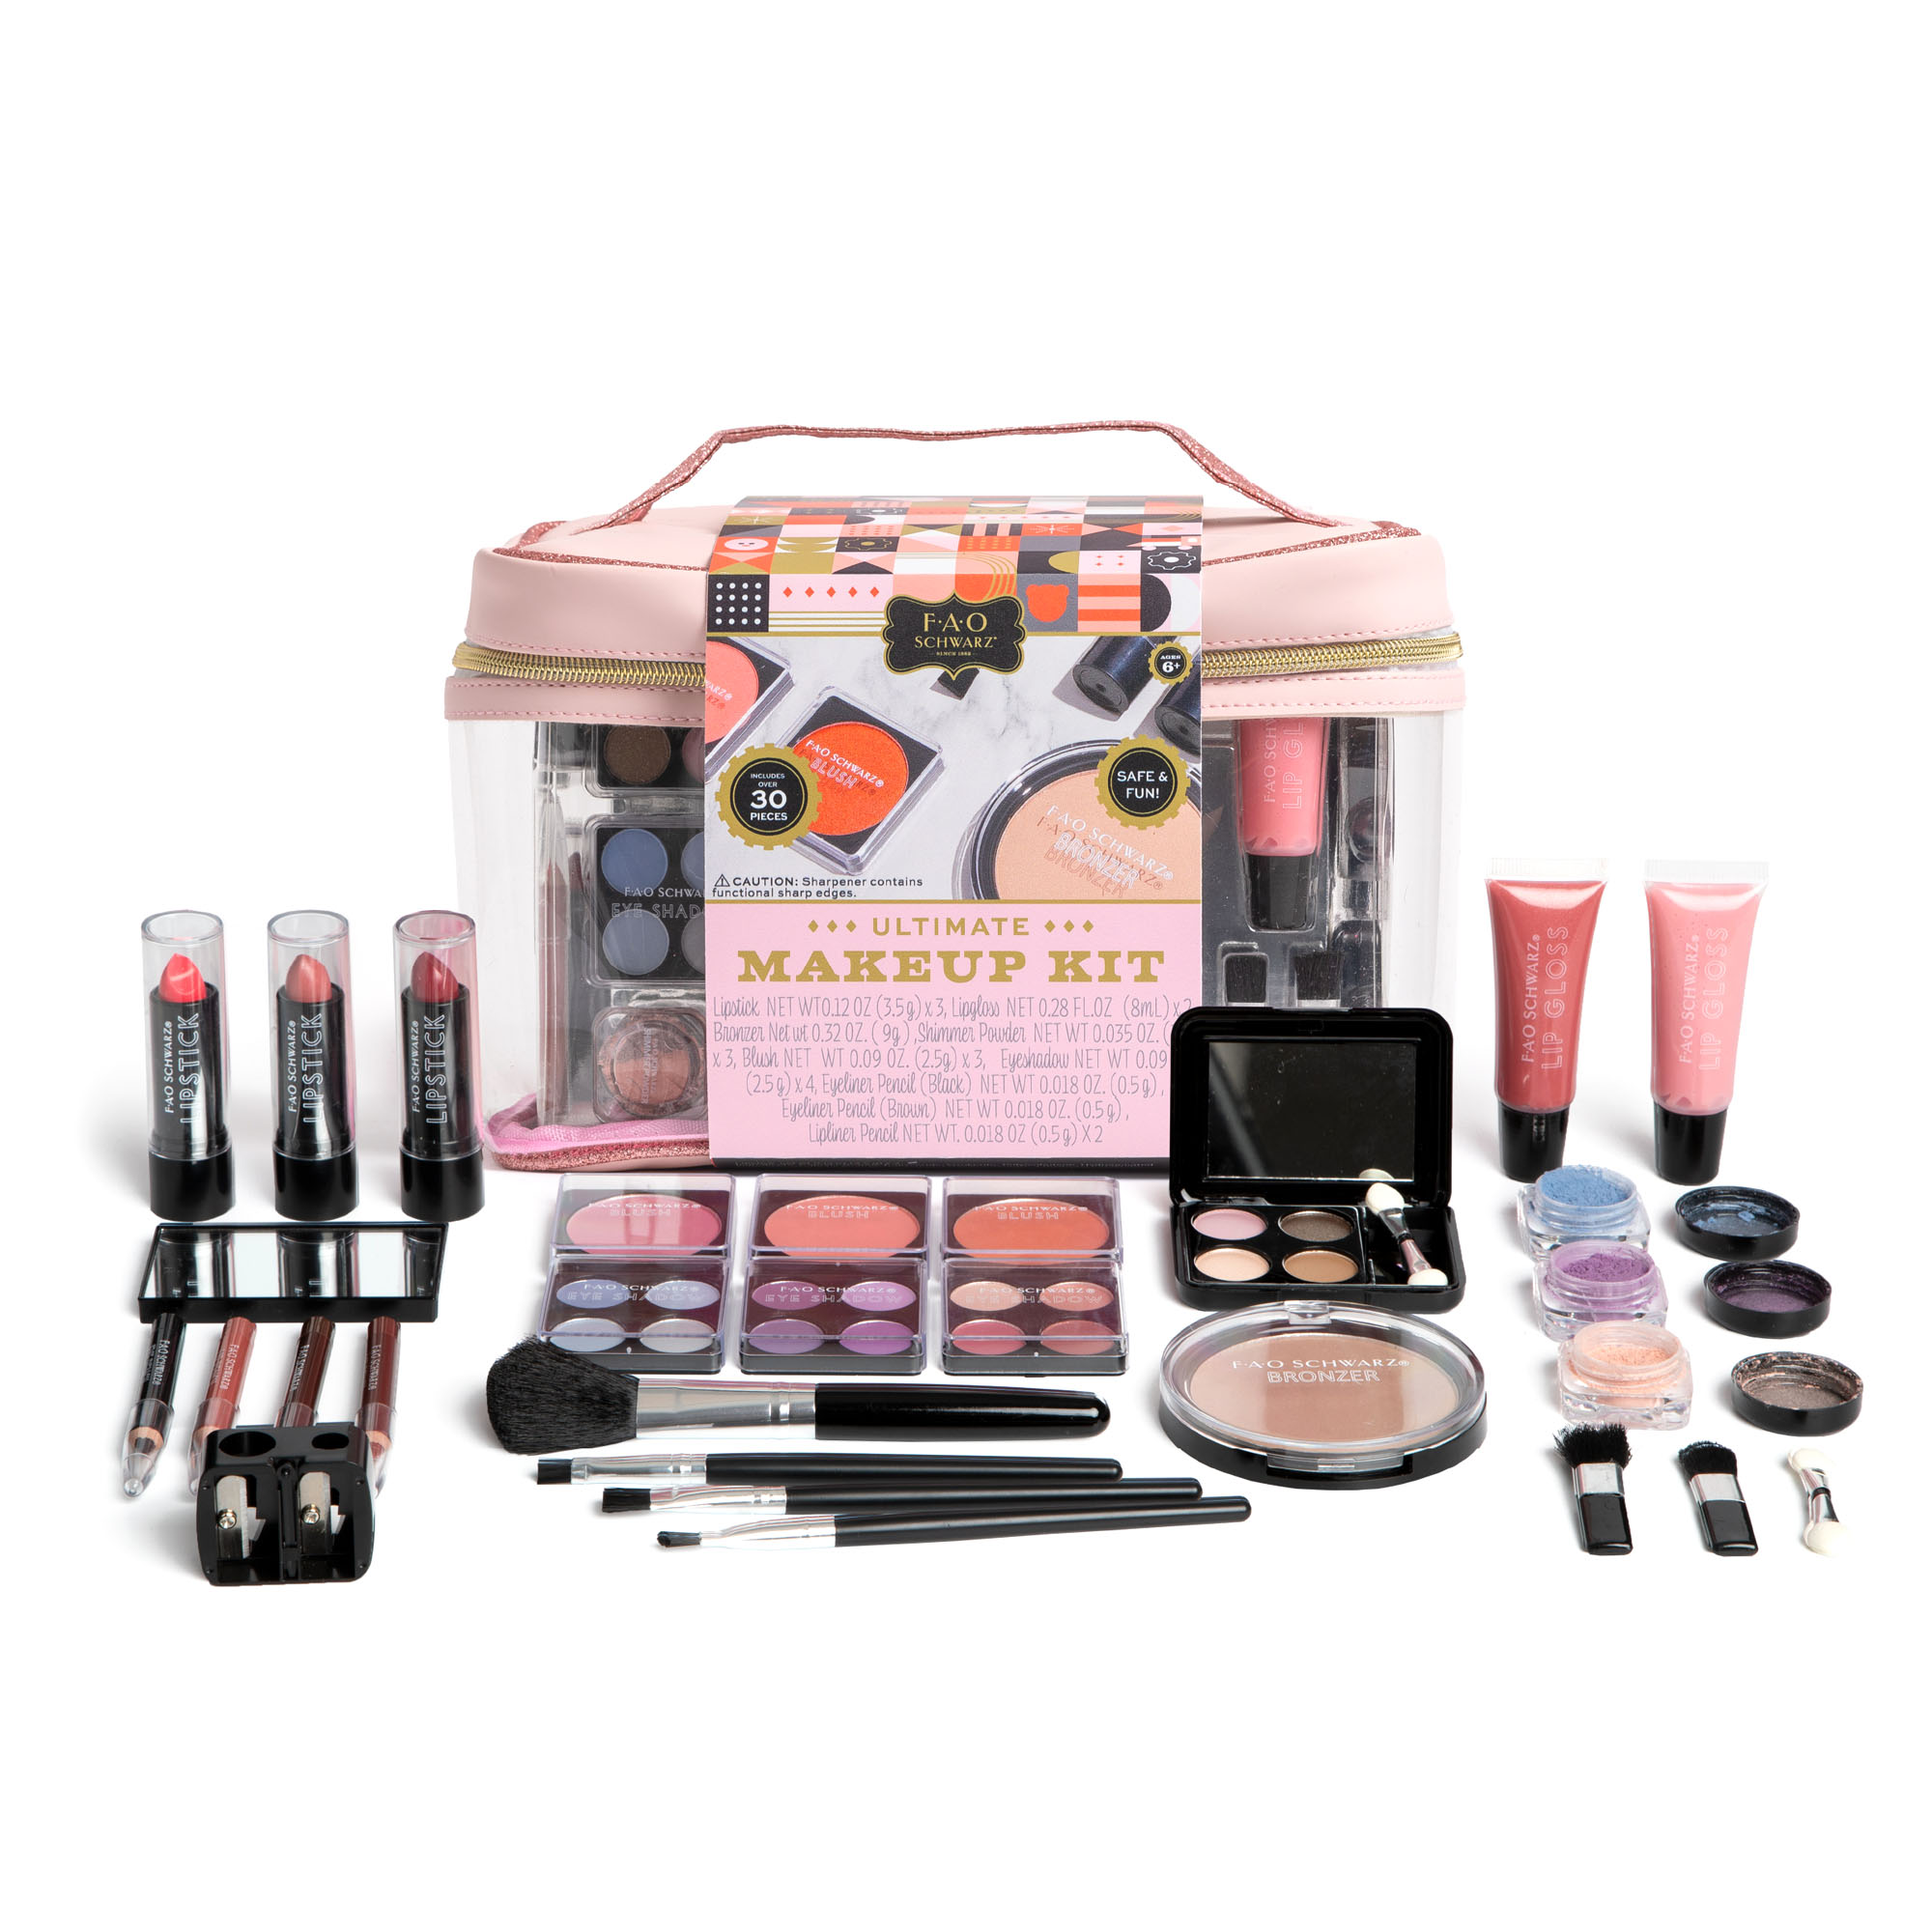 Kit ultimate makeup artist palette - FAO Schwarz